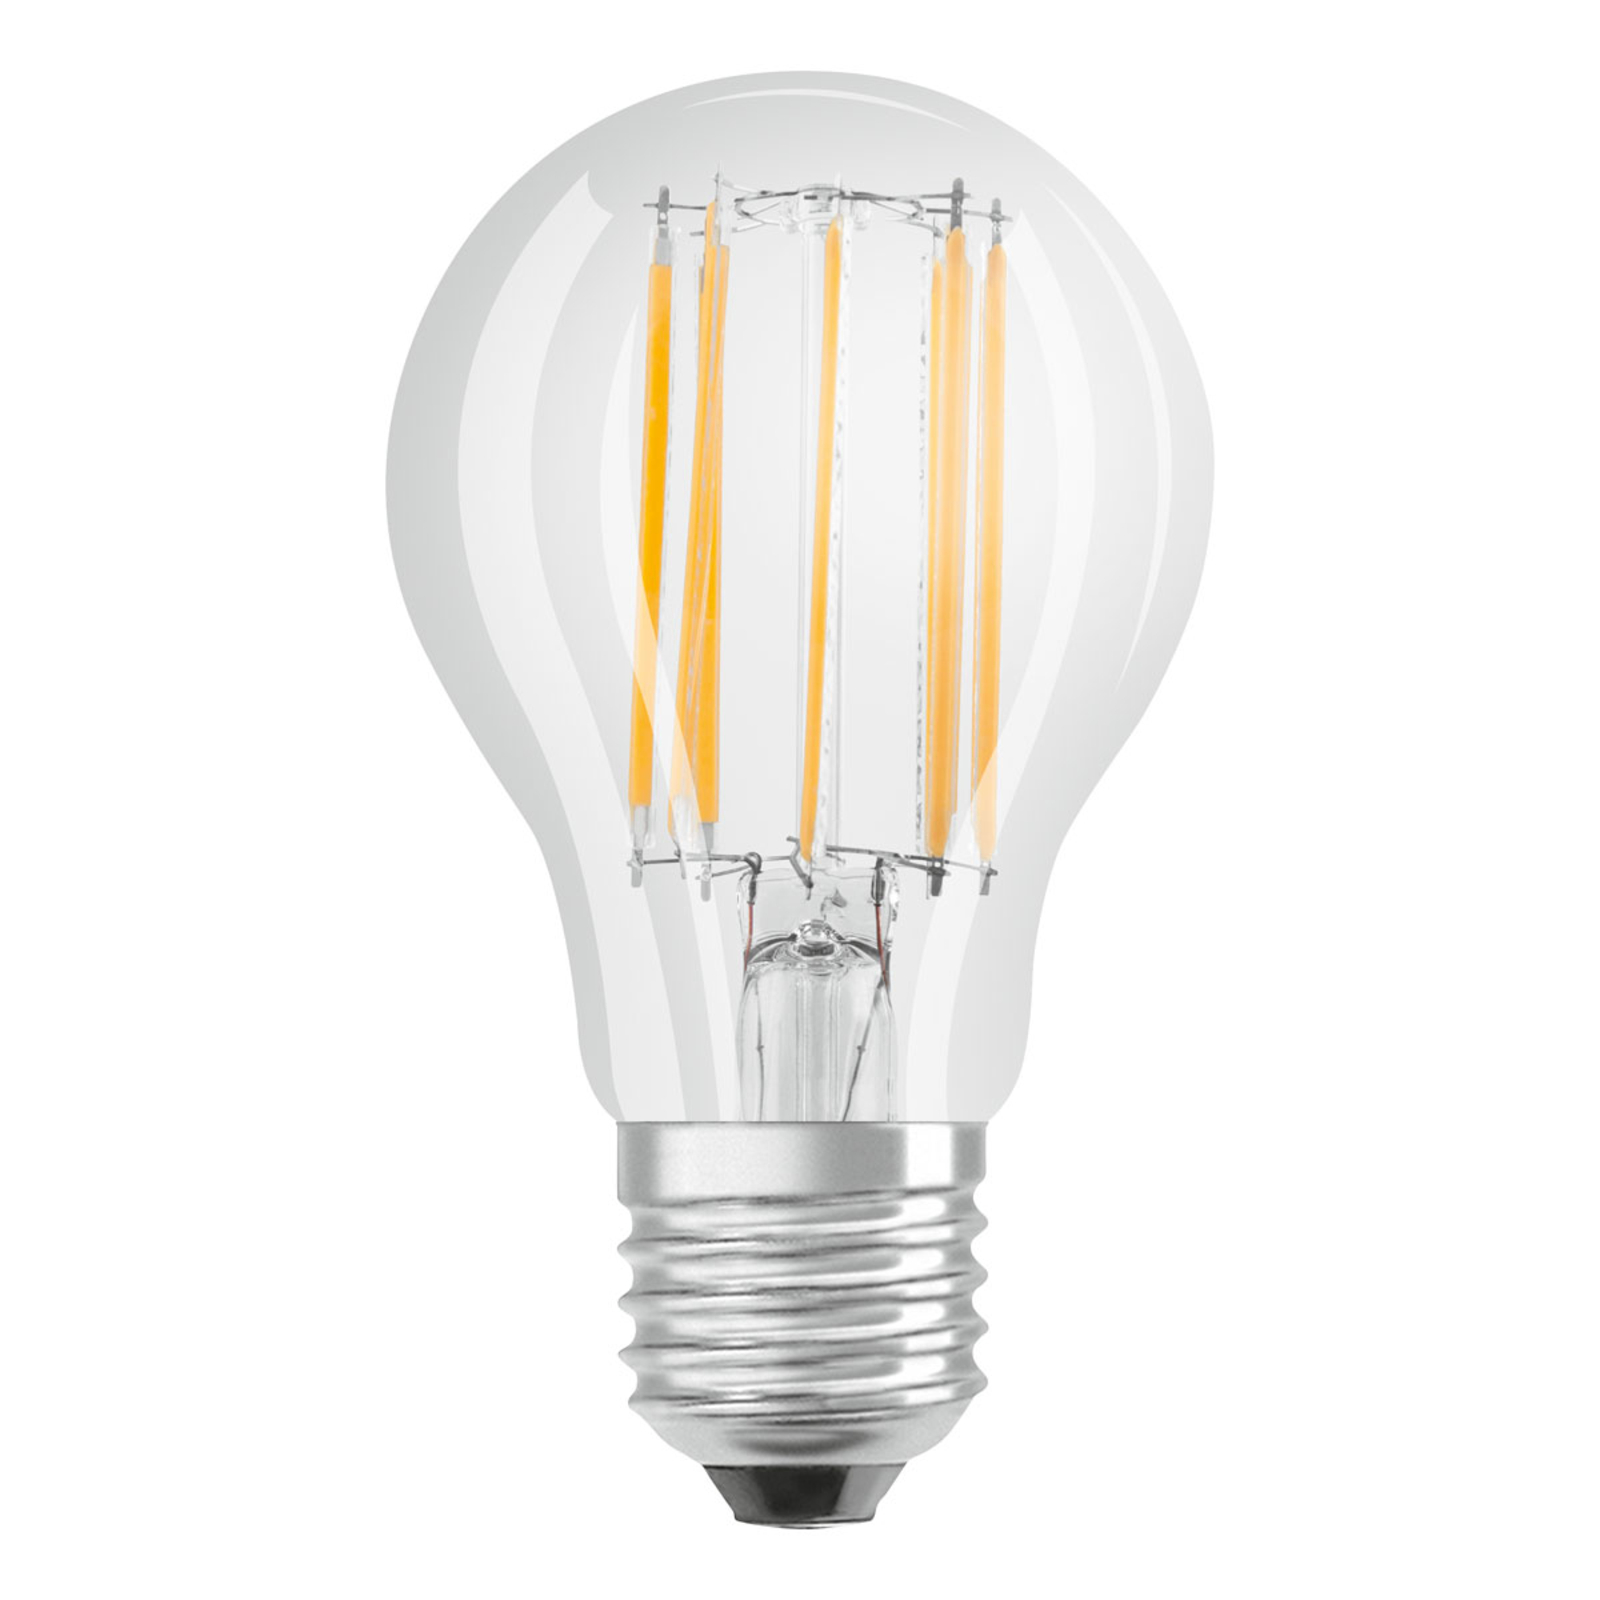 Scorch efficiëntie overdrijven OSRAM LED lamp E27 11W filament 4.000K helder | Lampen24.be